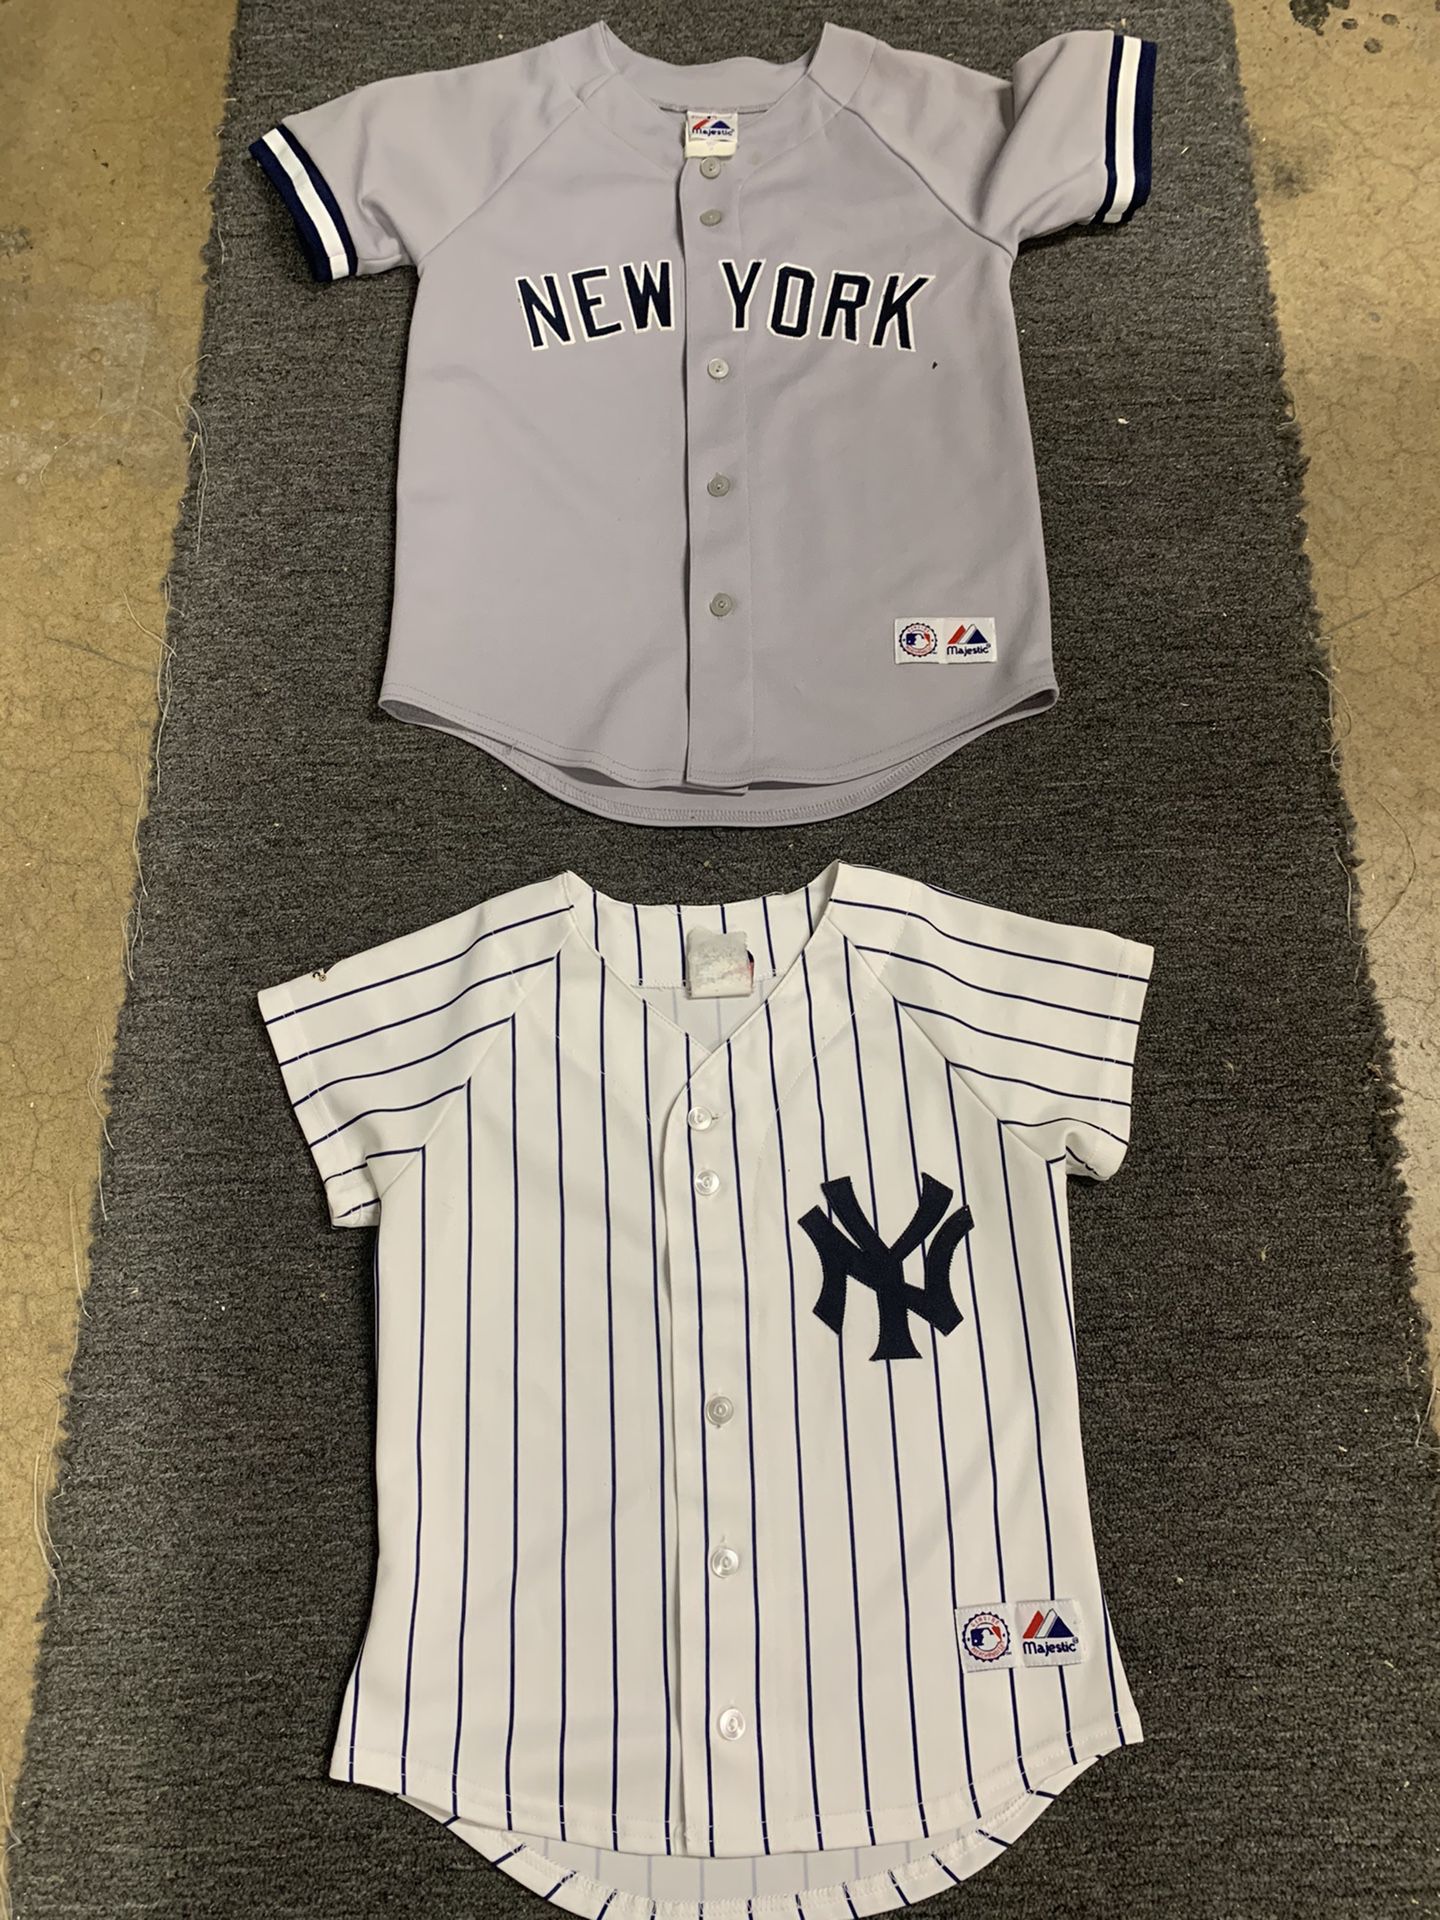 Youth size medium Yankees baseball jerseys shirts